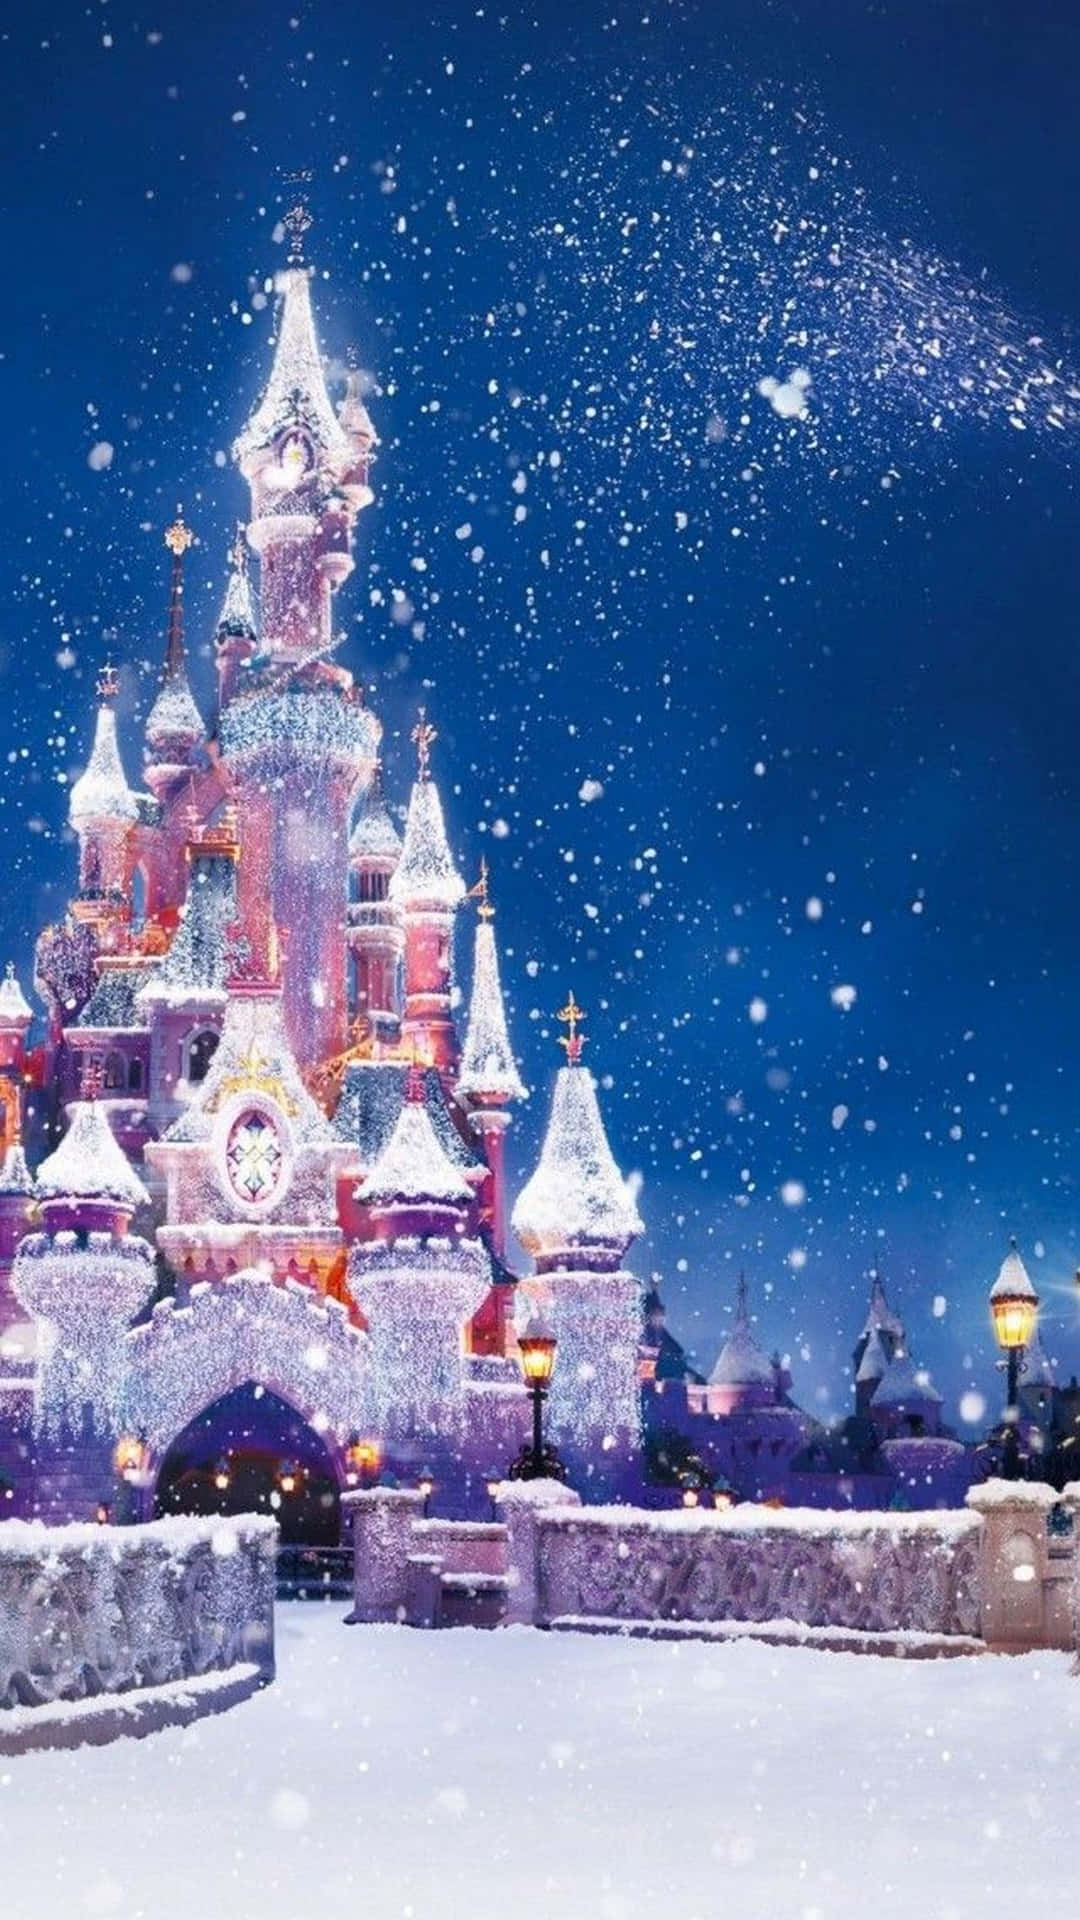 Winter Wonderland: An Enchanting Christmas Eve